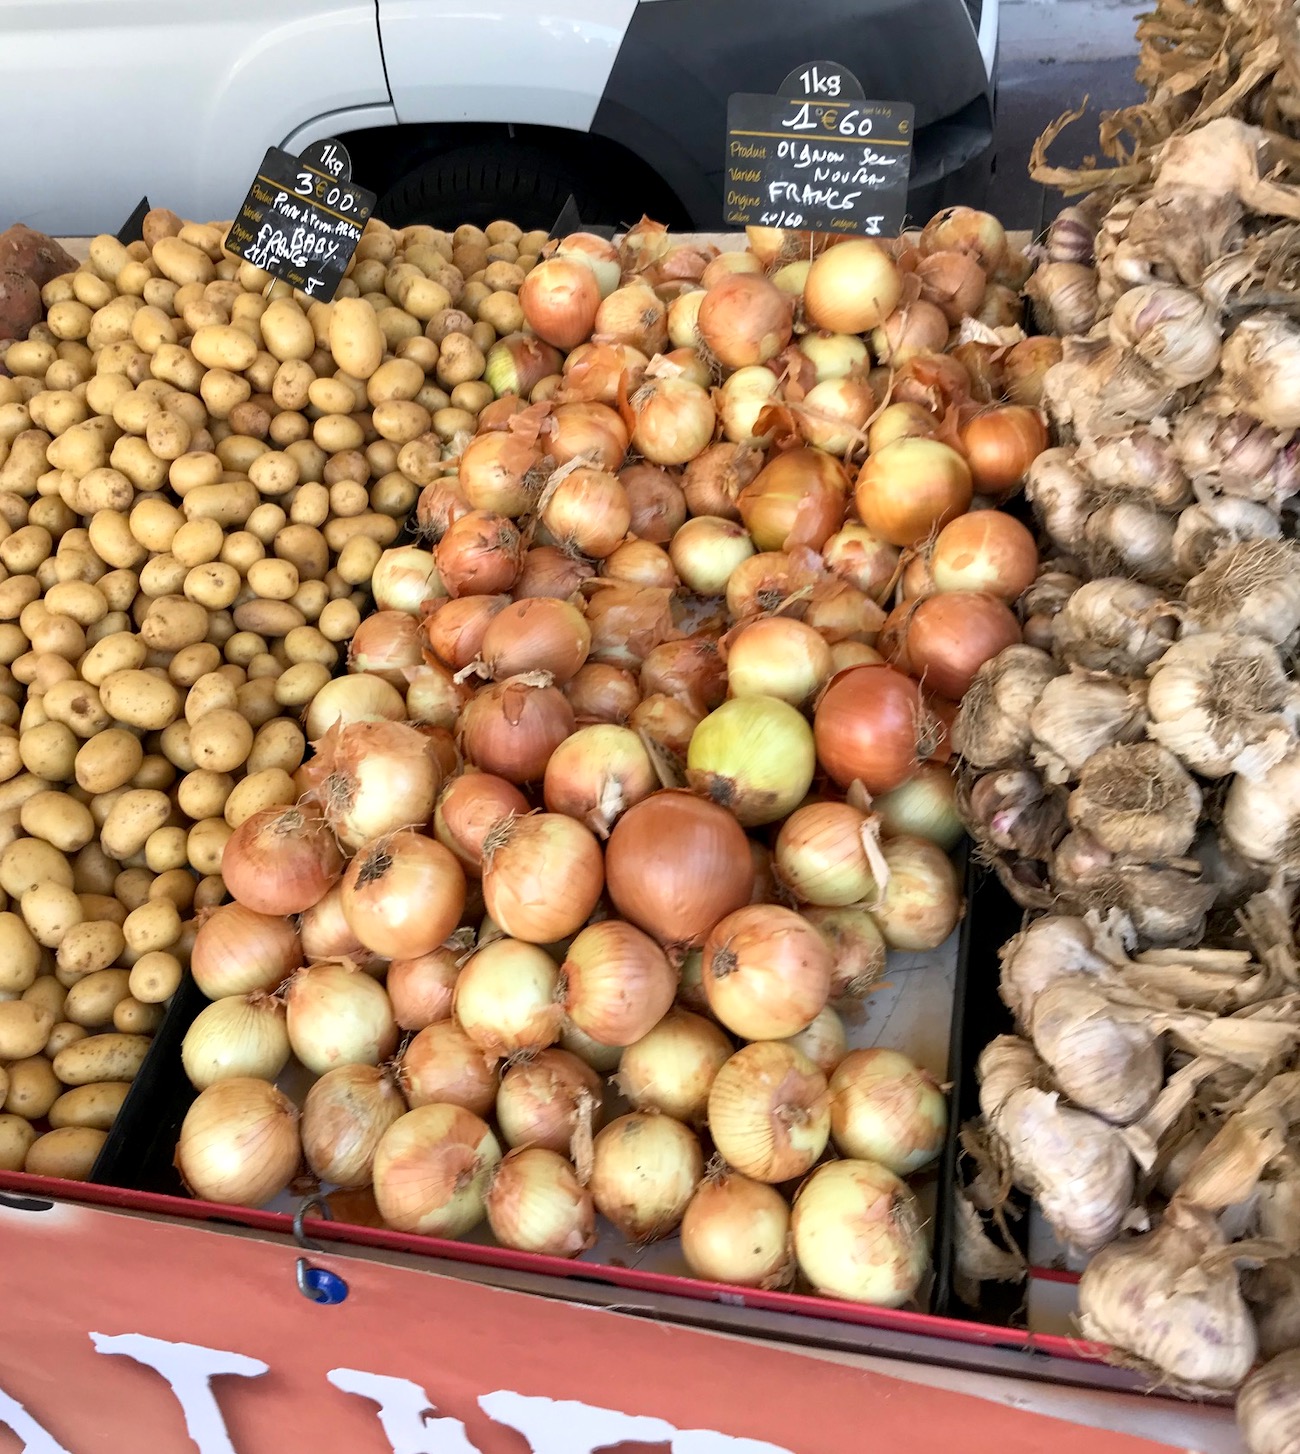 Onions and garlic at the market